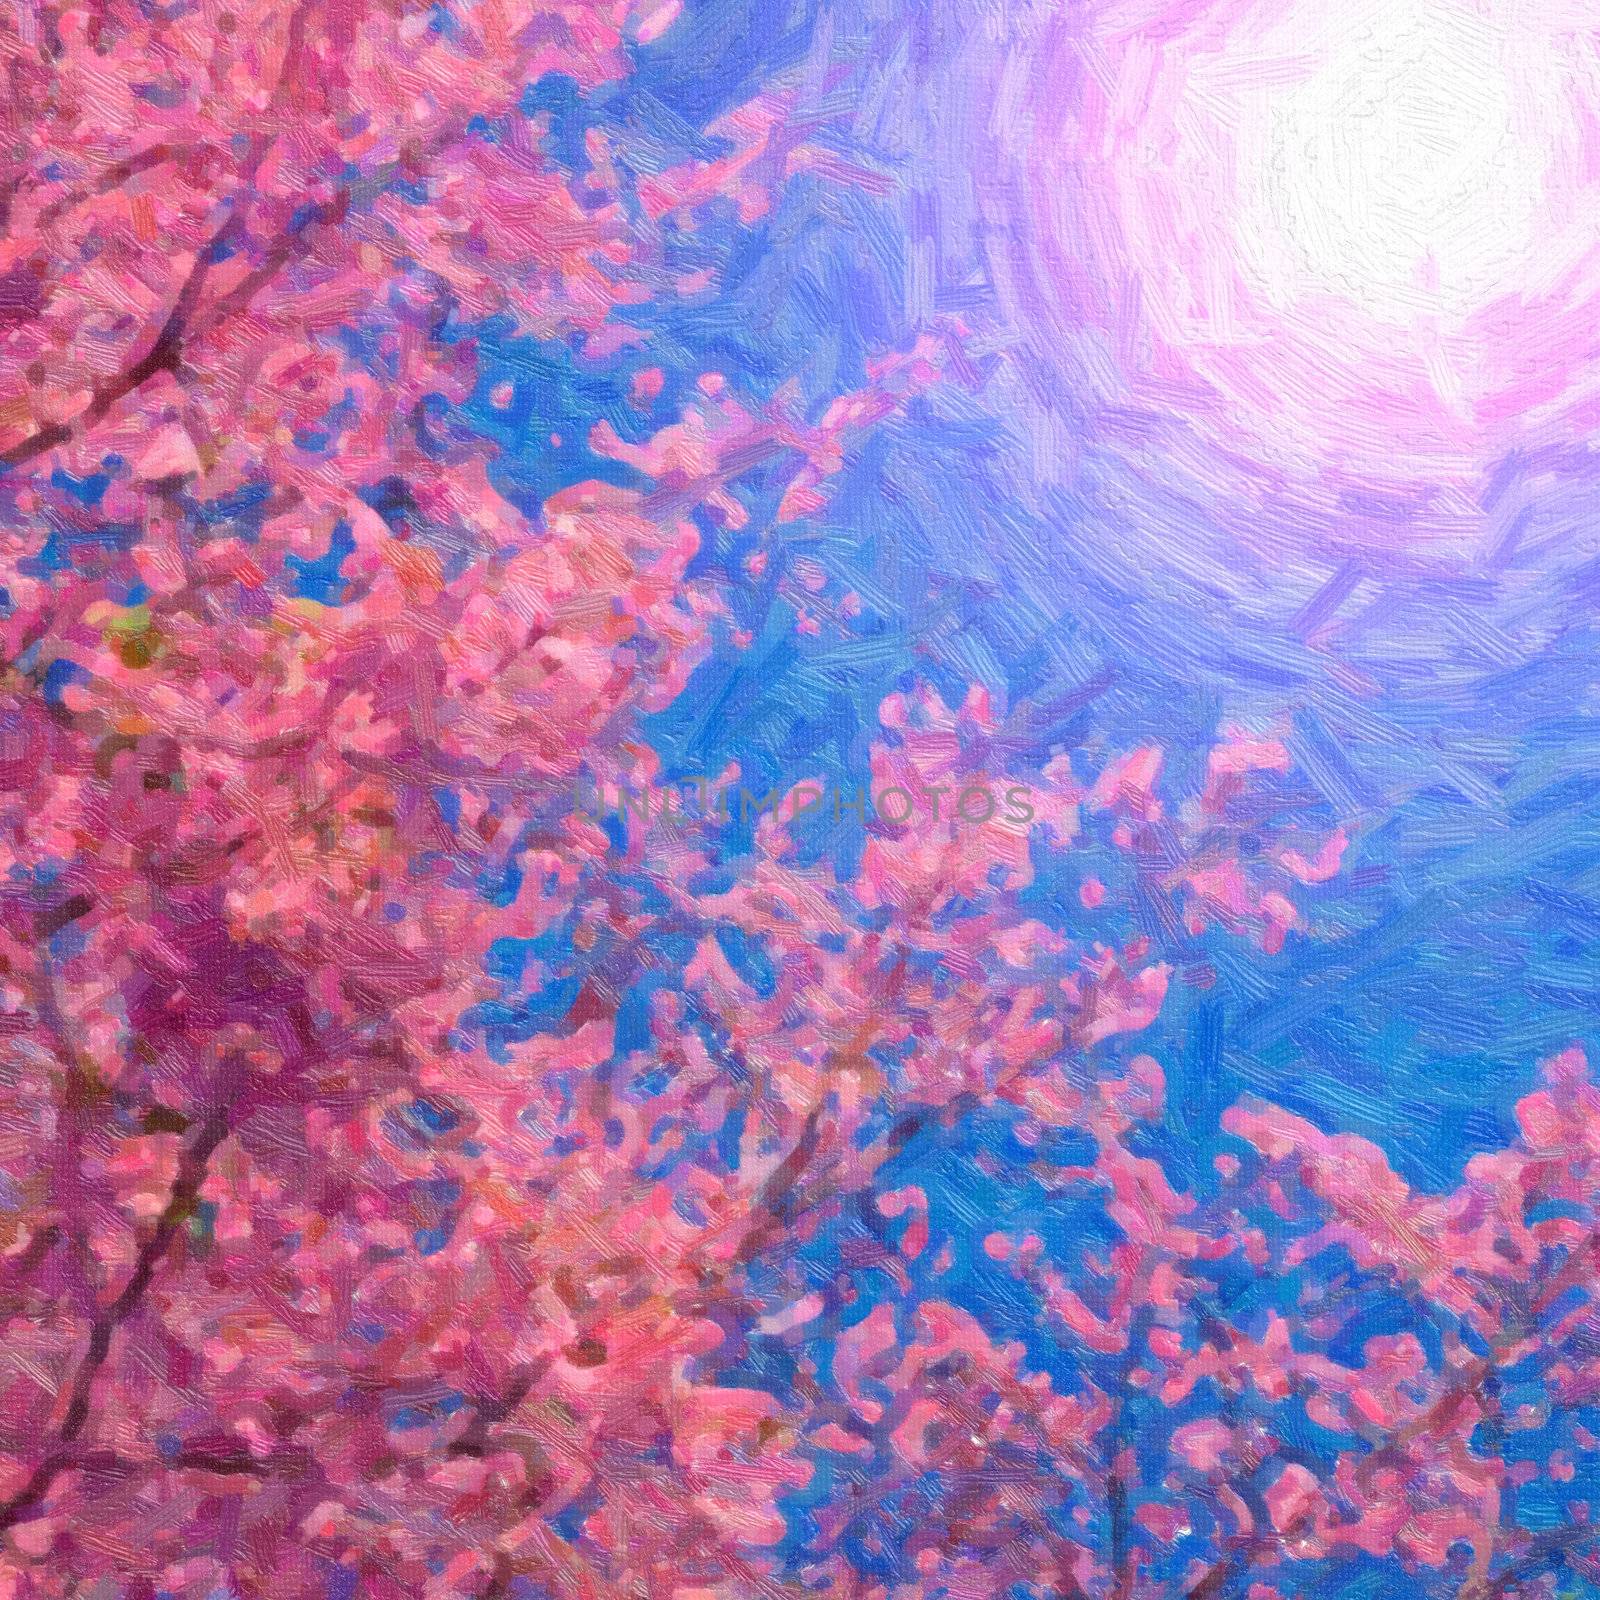 Blooming sakura on the blue sky background